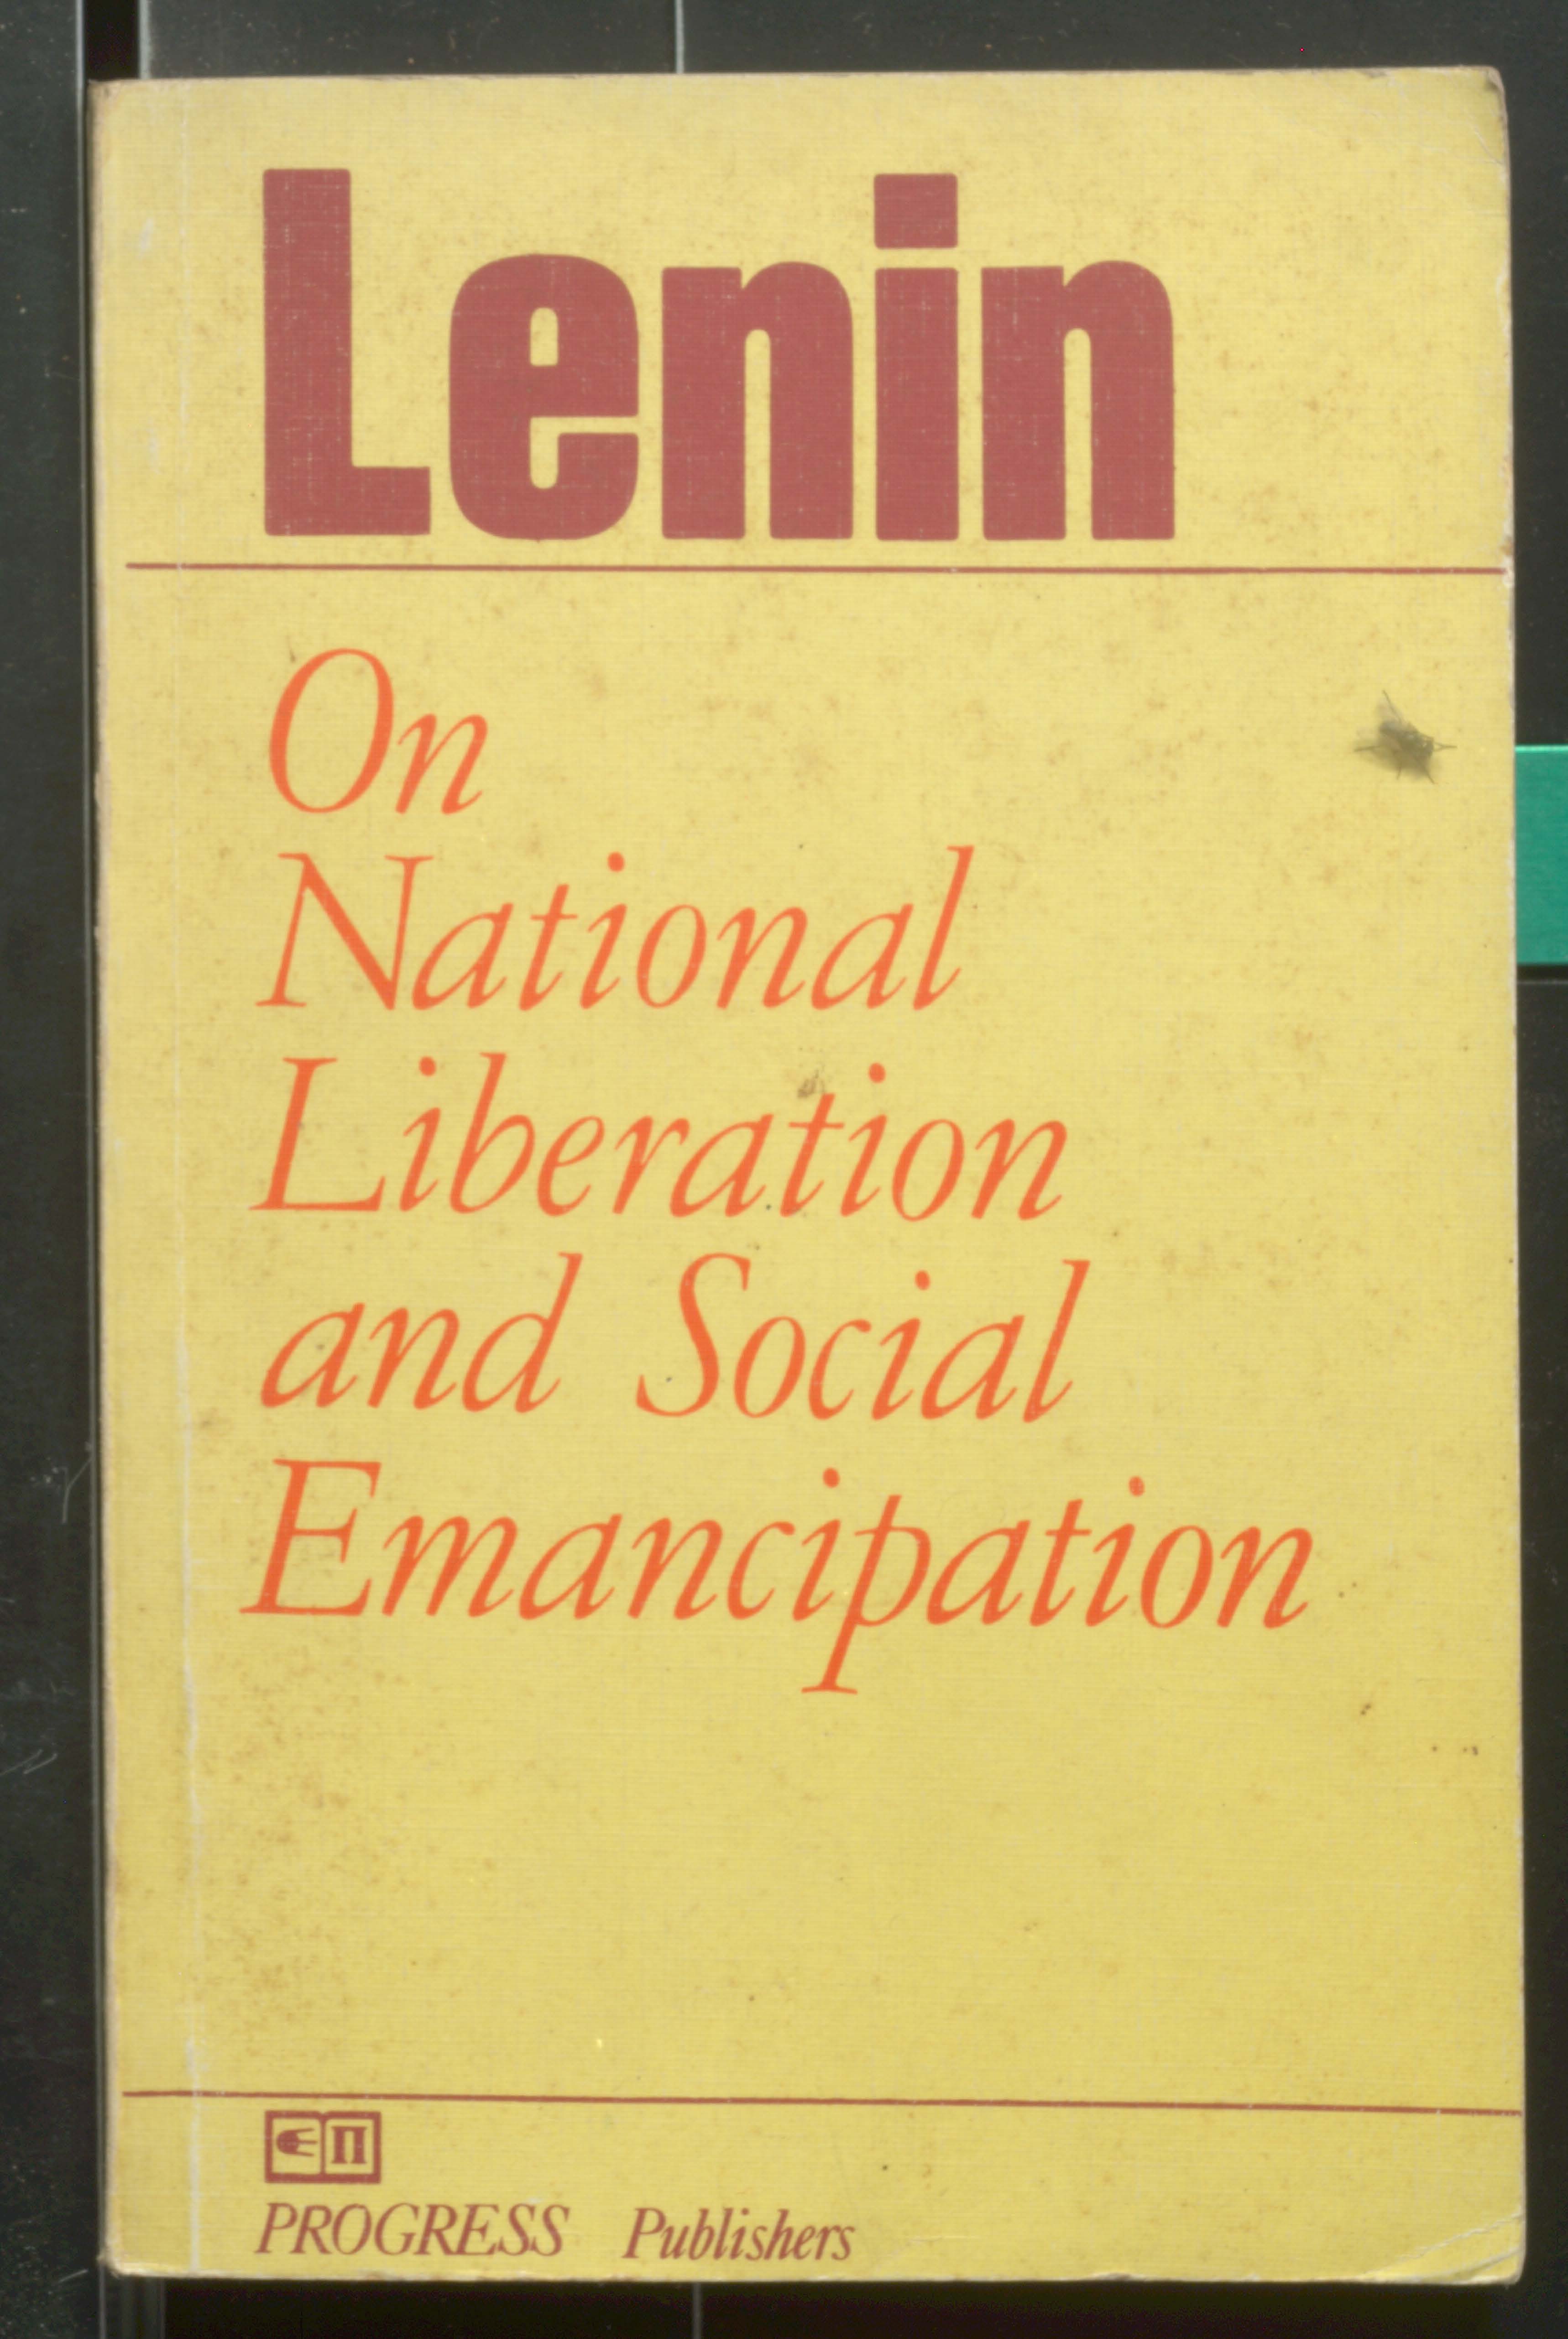 Lenin on national liberation and social emancipation